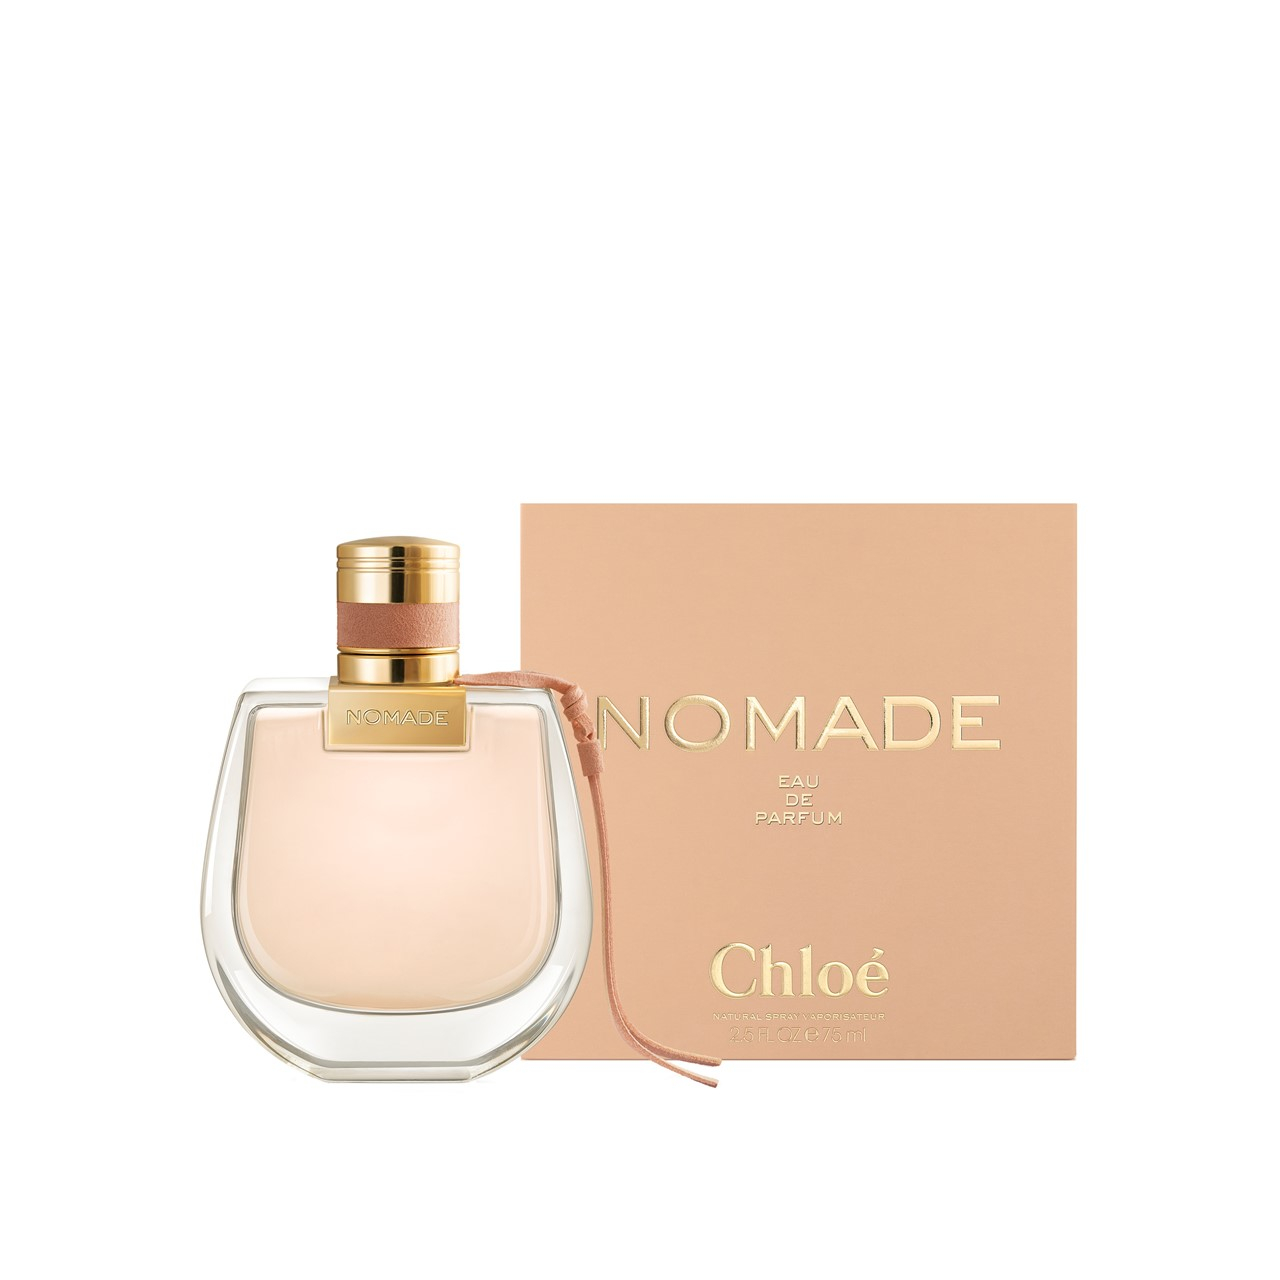 Chloé Nomade Eau de Parfum 75ml (2.5fl oz)